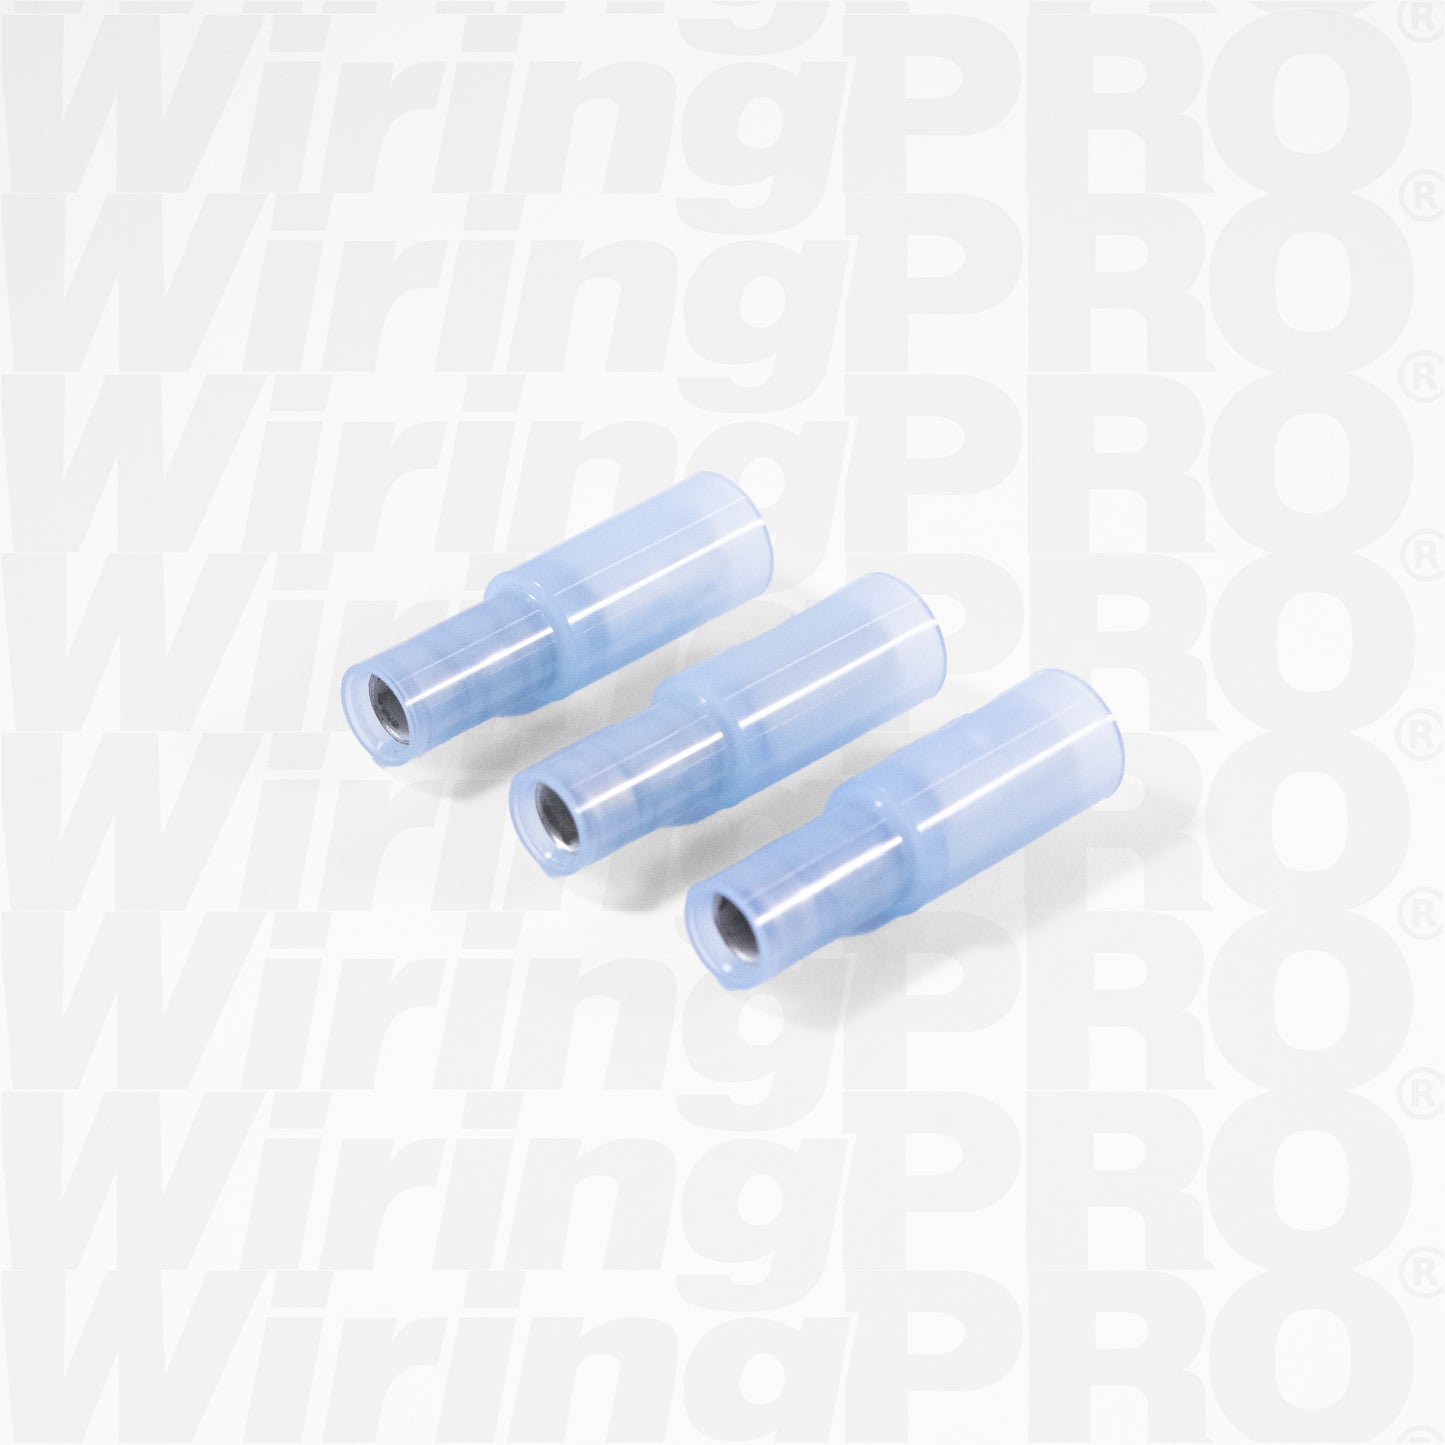 Snap Plug Receptacles - Nylon Insulated